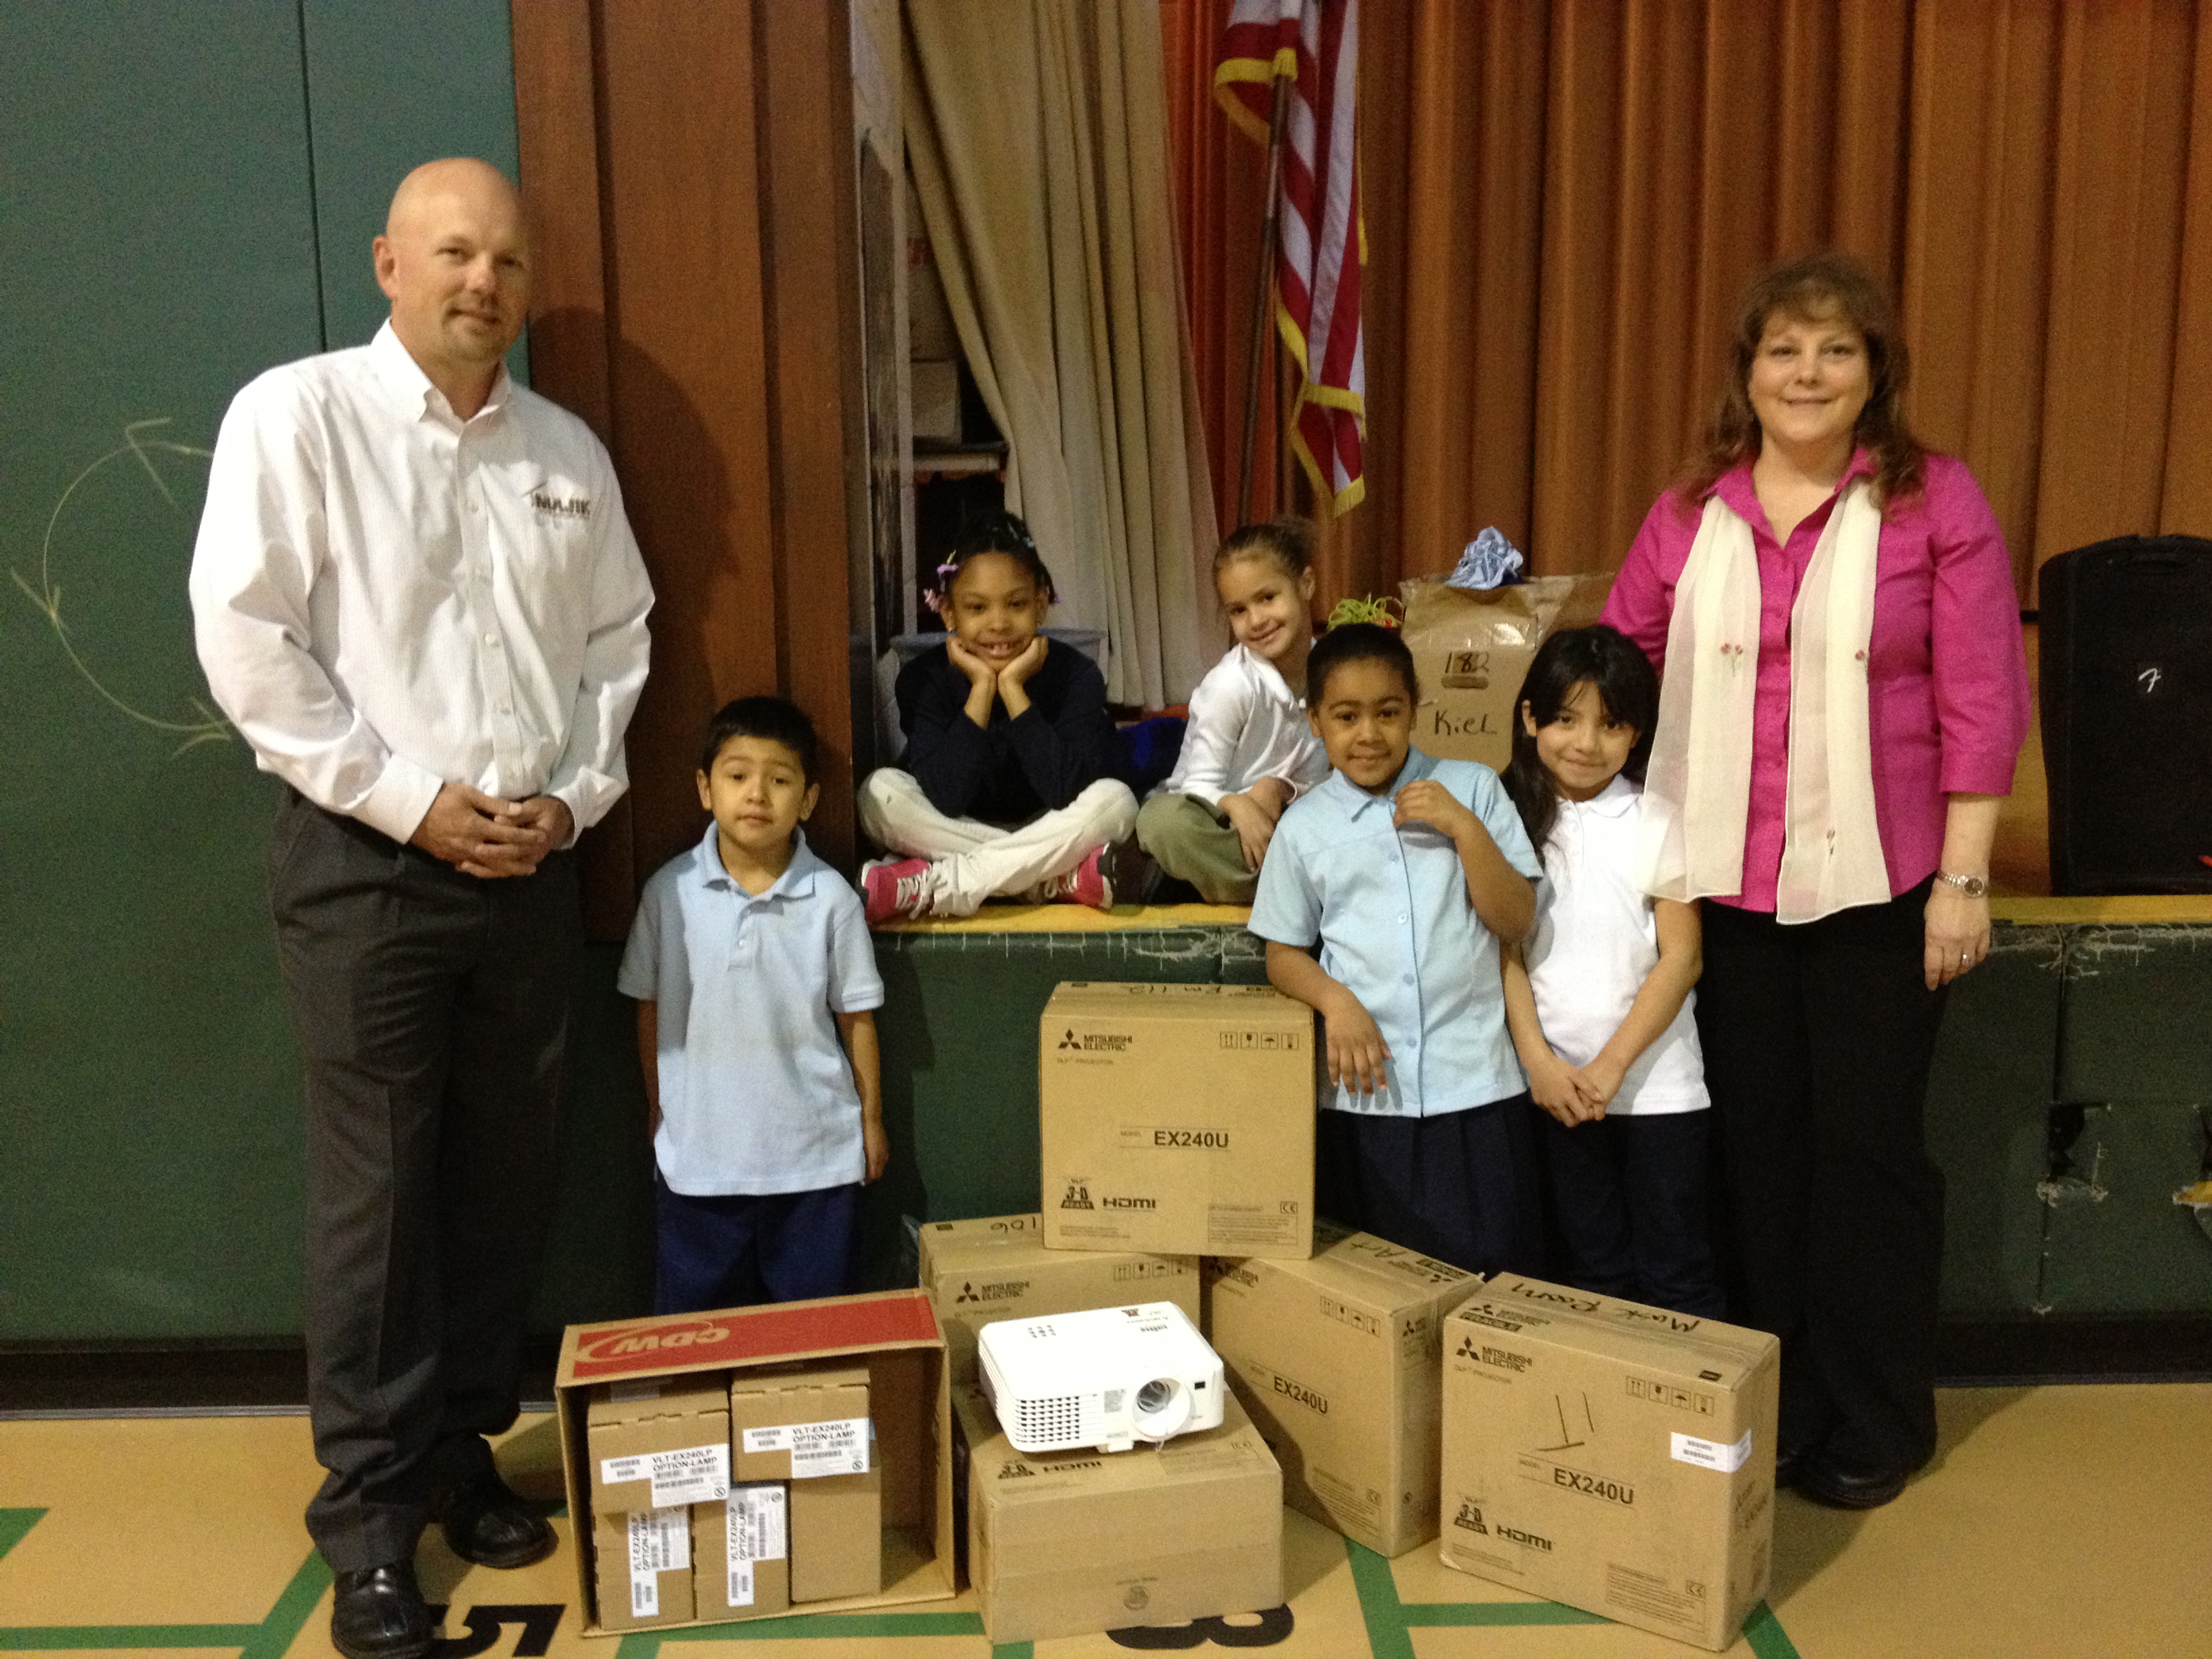 PA Rental Dealers donate $5000 worth of Computer Equipment to Carter & MacRea Elementary School